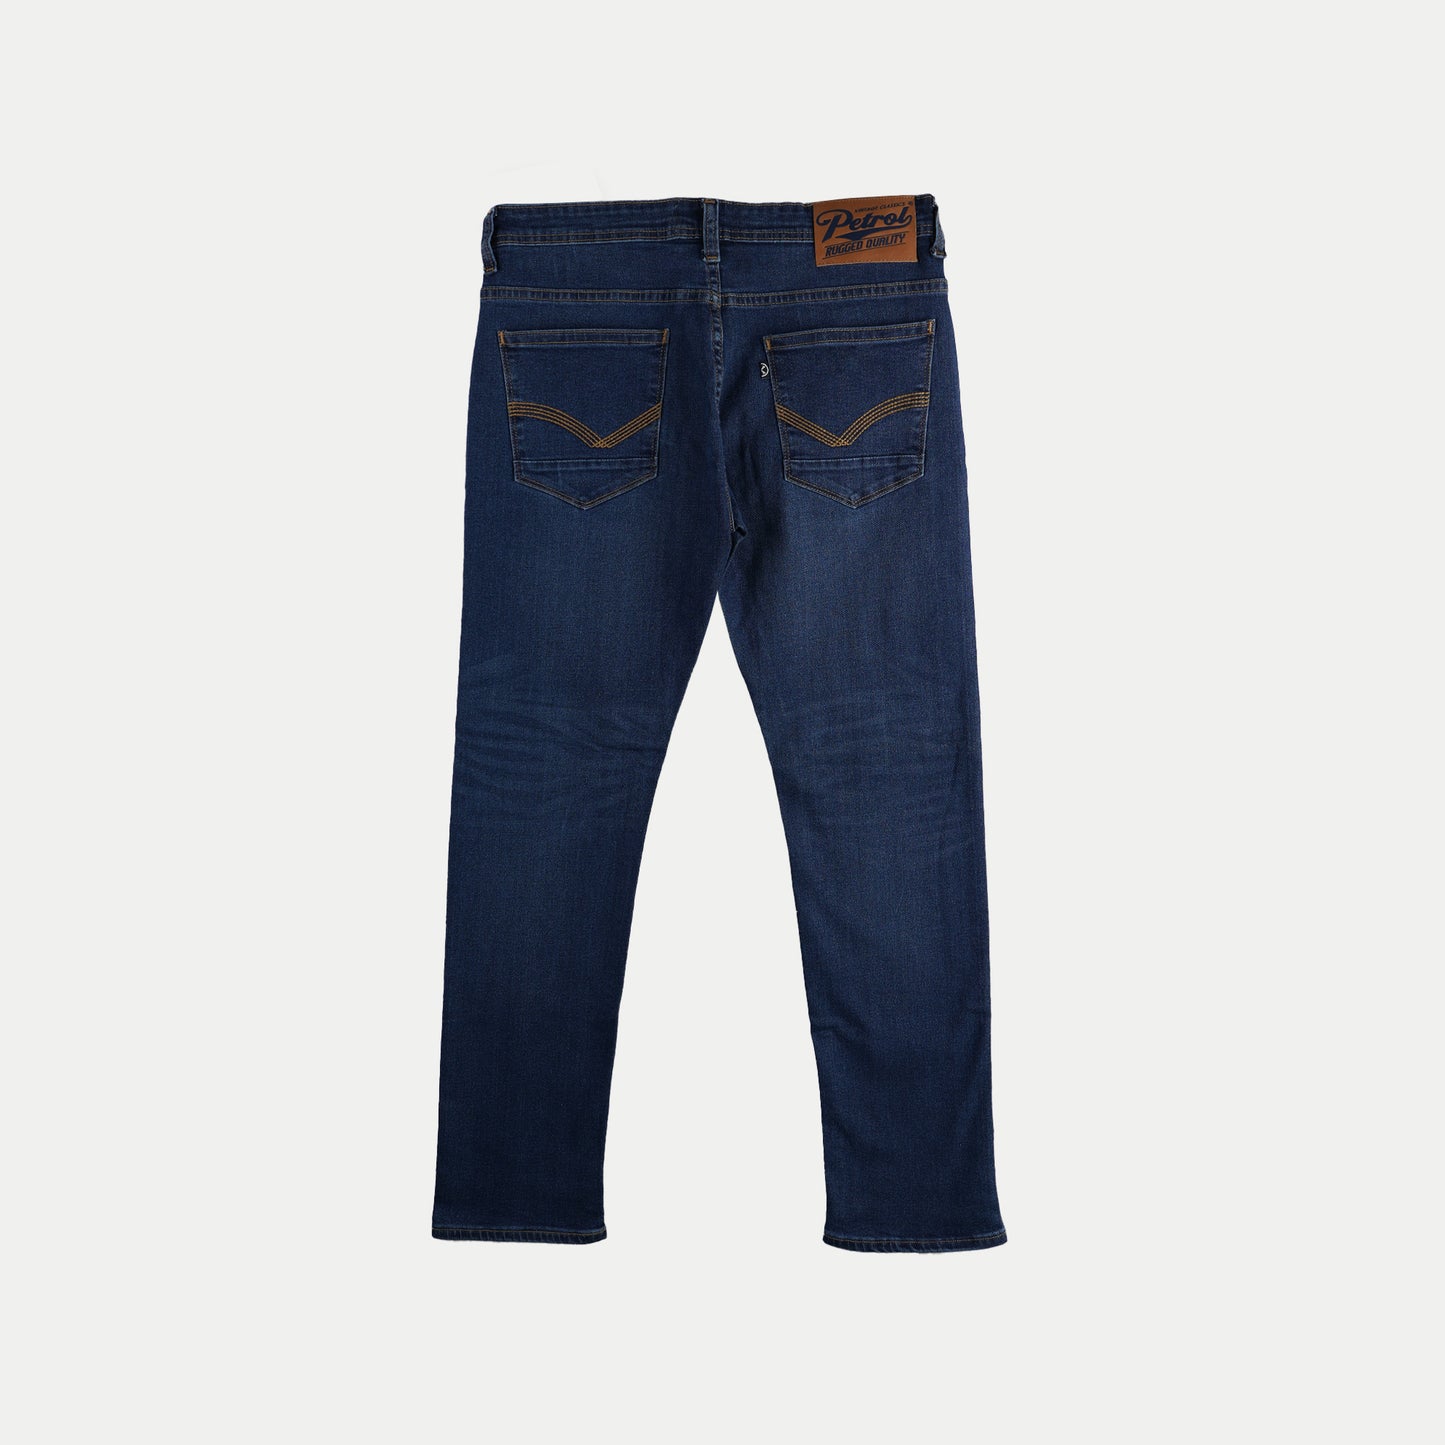 Petrol Basic Denim Pants for Men Skin Tight Fitting Mid Rise Trendy fashion Casual Bottoms Medium Shade Jeans for Men 143345-U (Medium Shade)